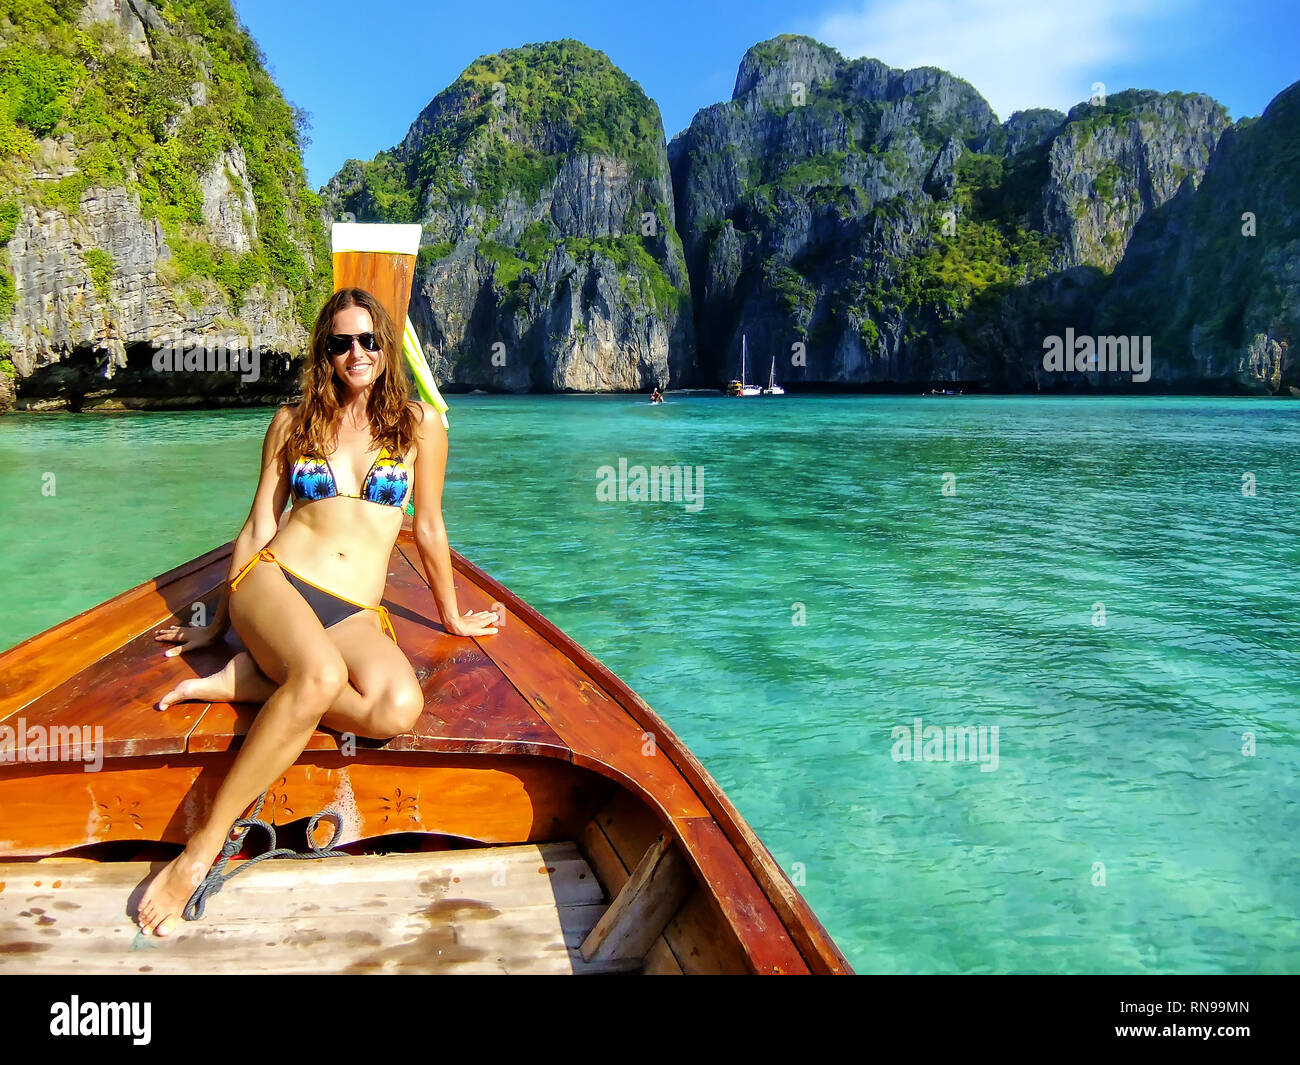 Junge Frau sitzt an der Vorderseite des Longtail-Boot in der Maya Bay auf Phi Phi Leh Island, Provinz Krabi, Thailand. Phi Phi Leh ist Teil des Mu Ko Phi Phi Na Stockfoto